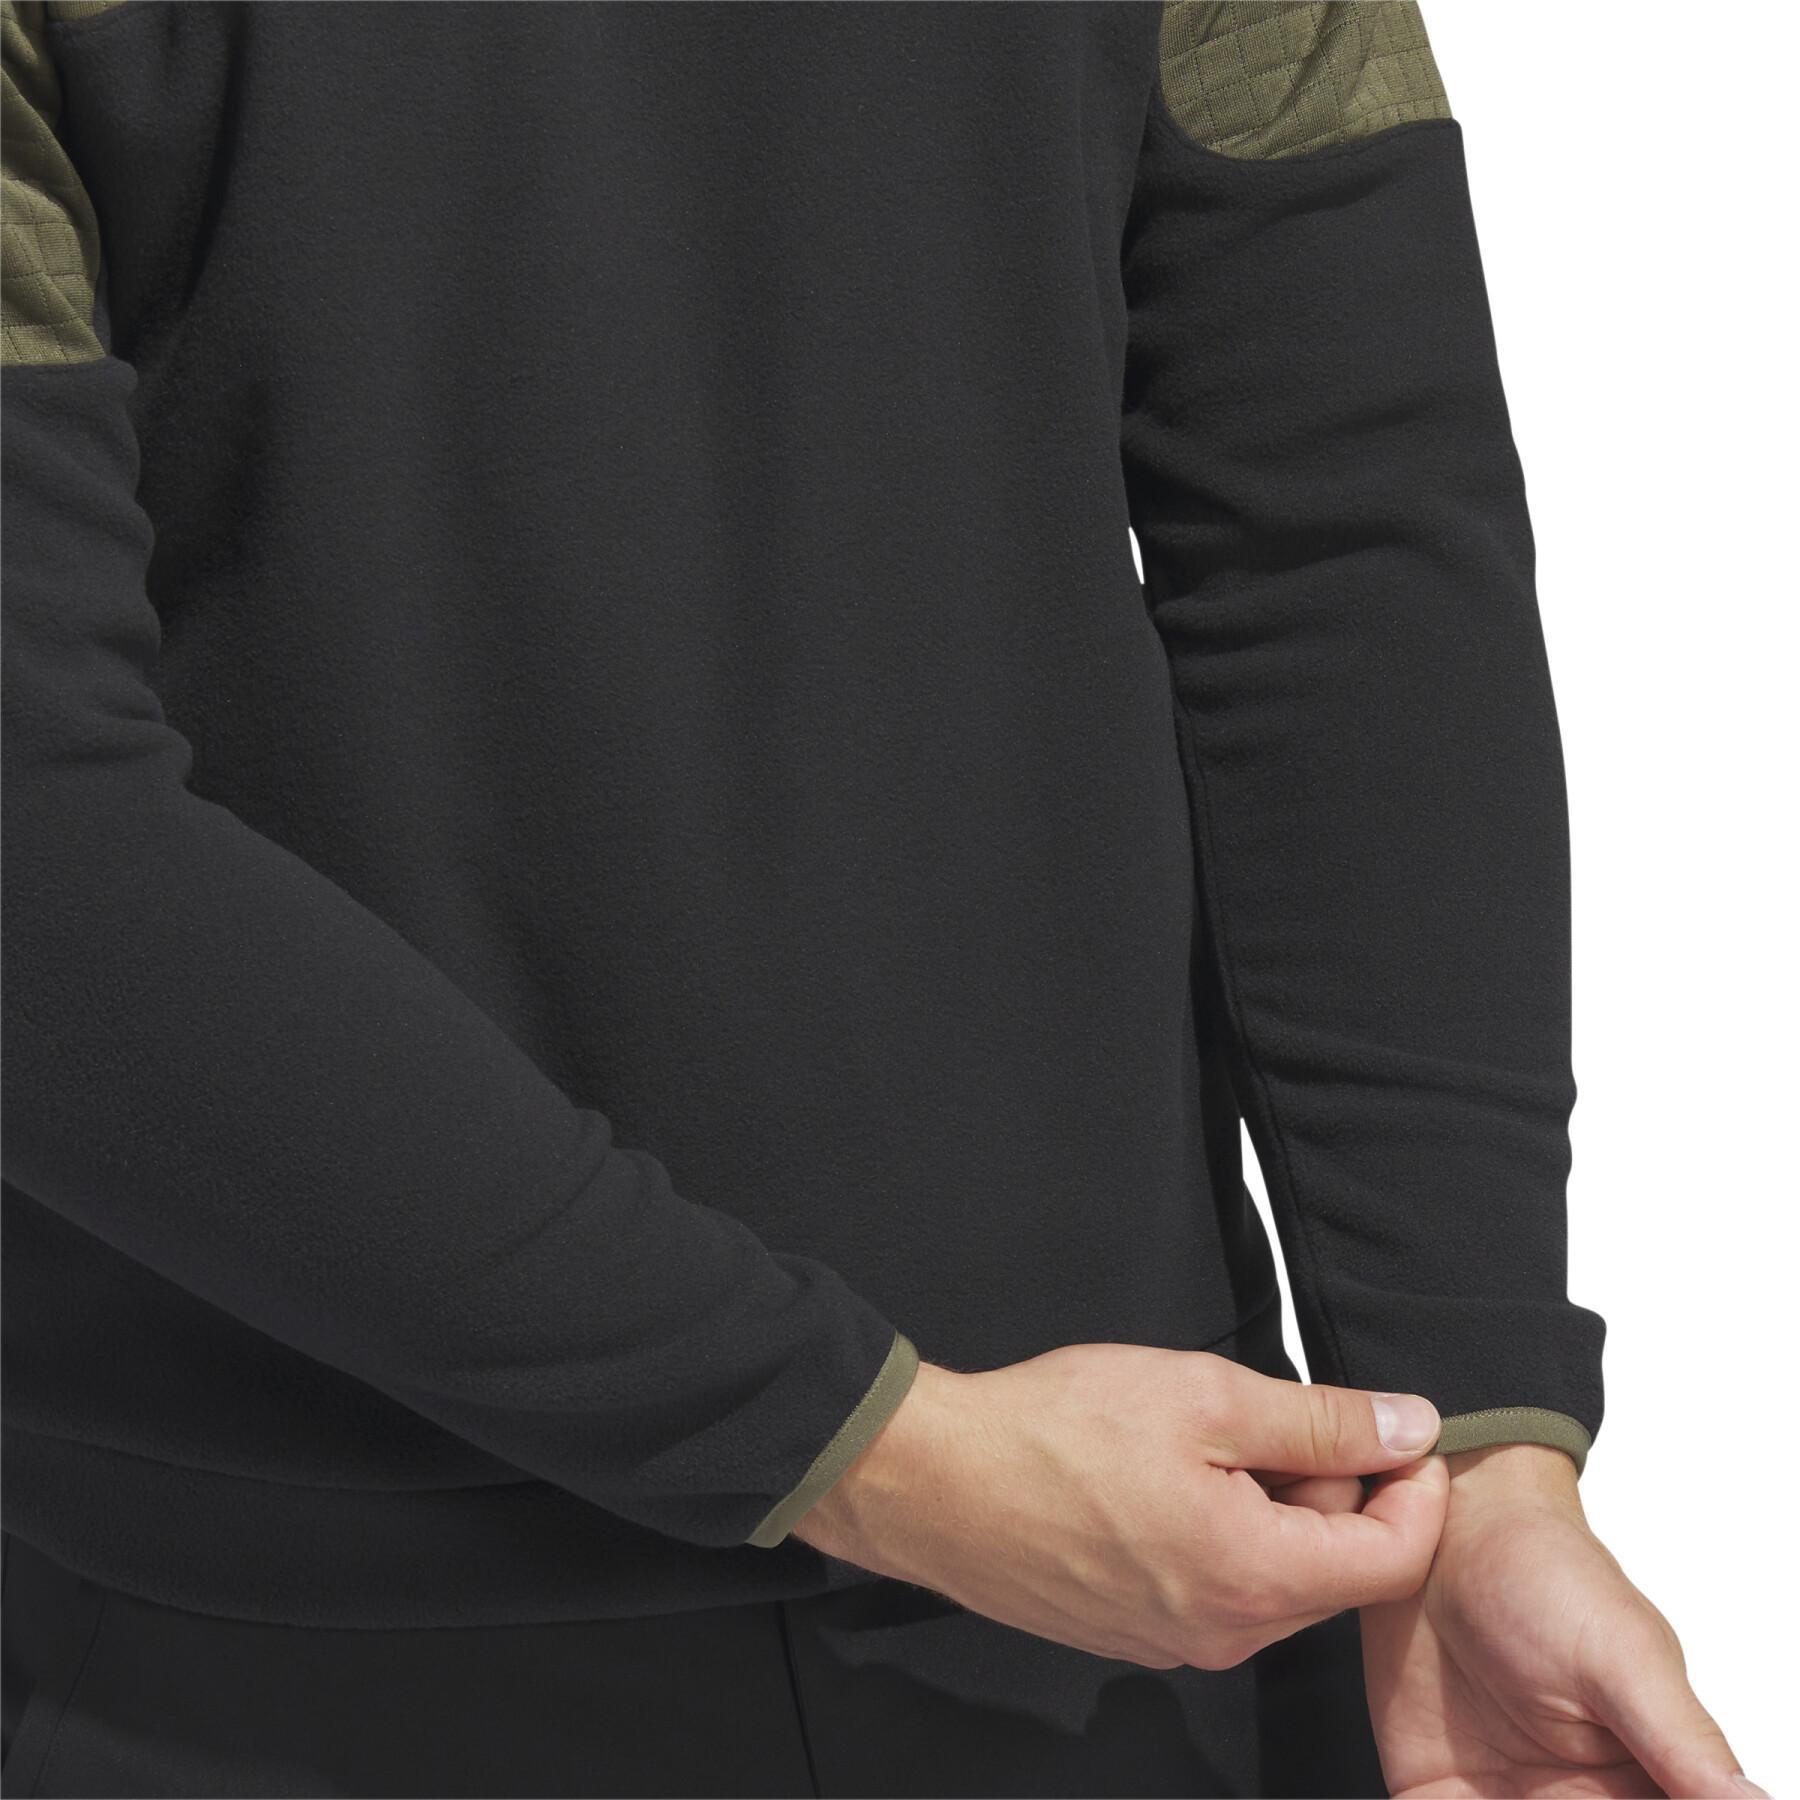 Sweatshirt 1/4 zip adidas DWR Colorblock